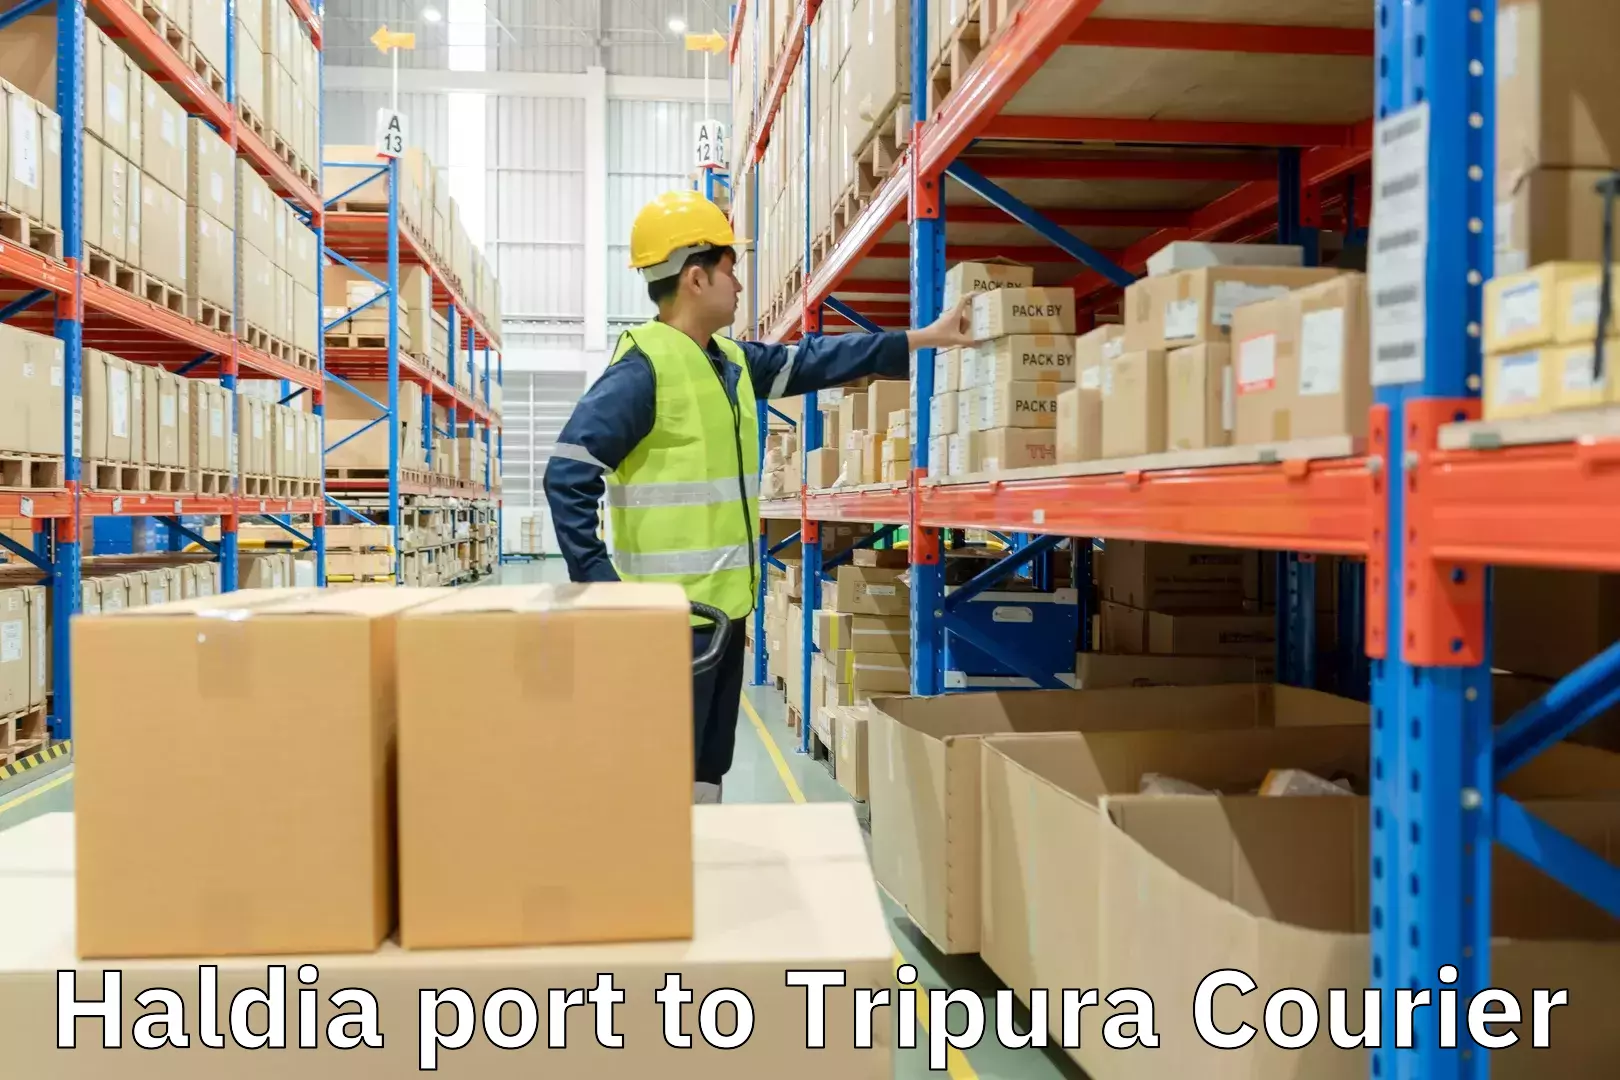 Bulk courier orders Haldia port to Tripura